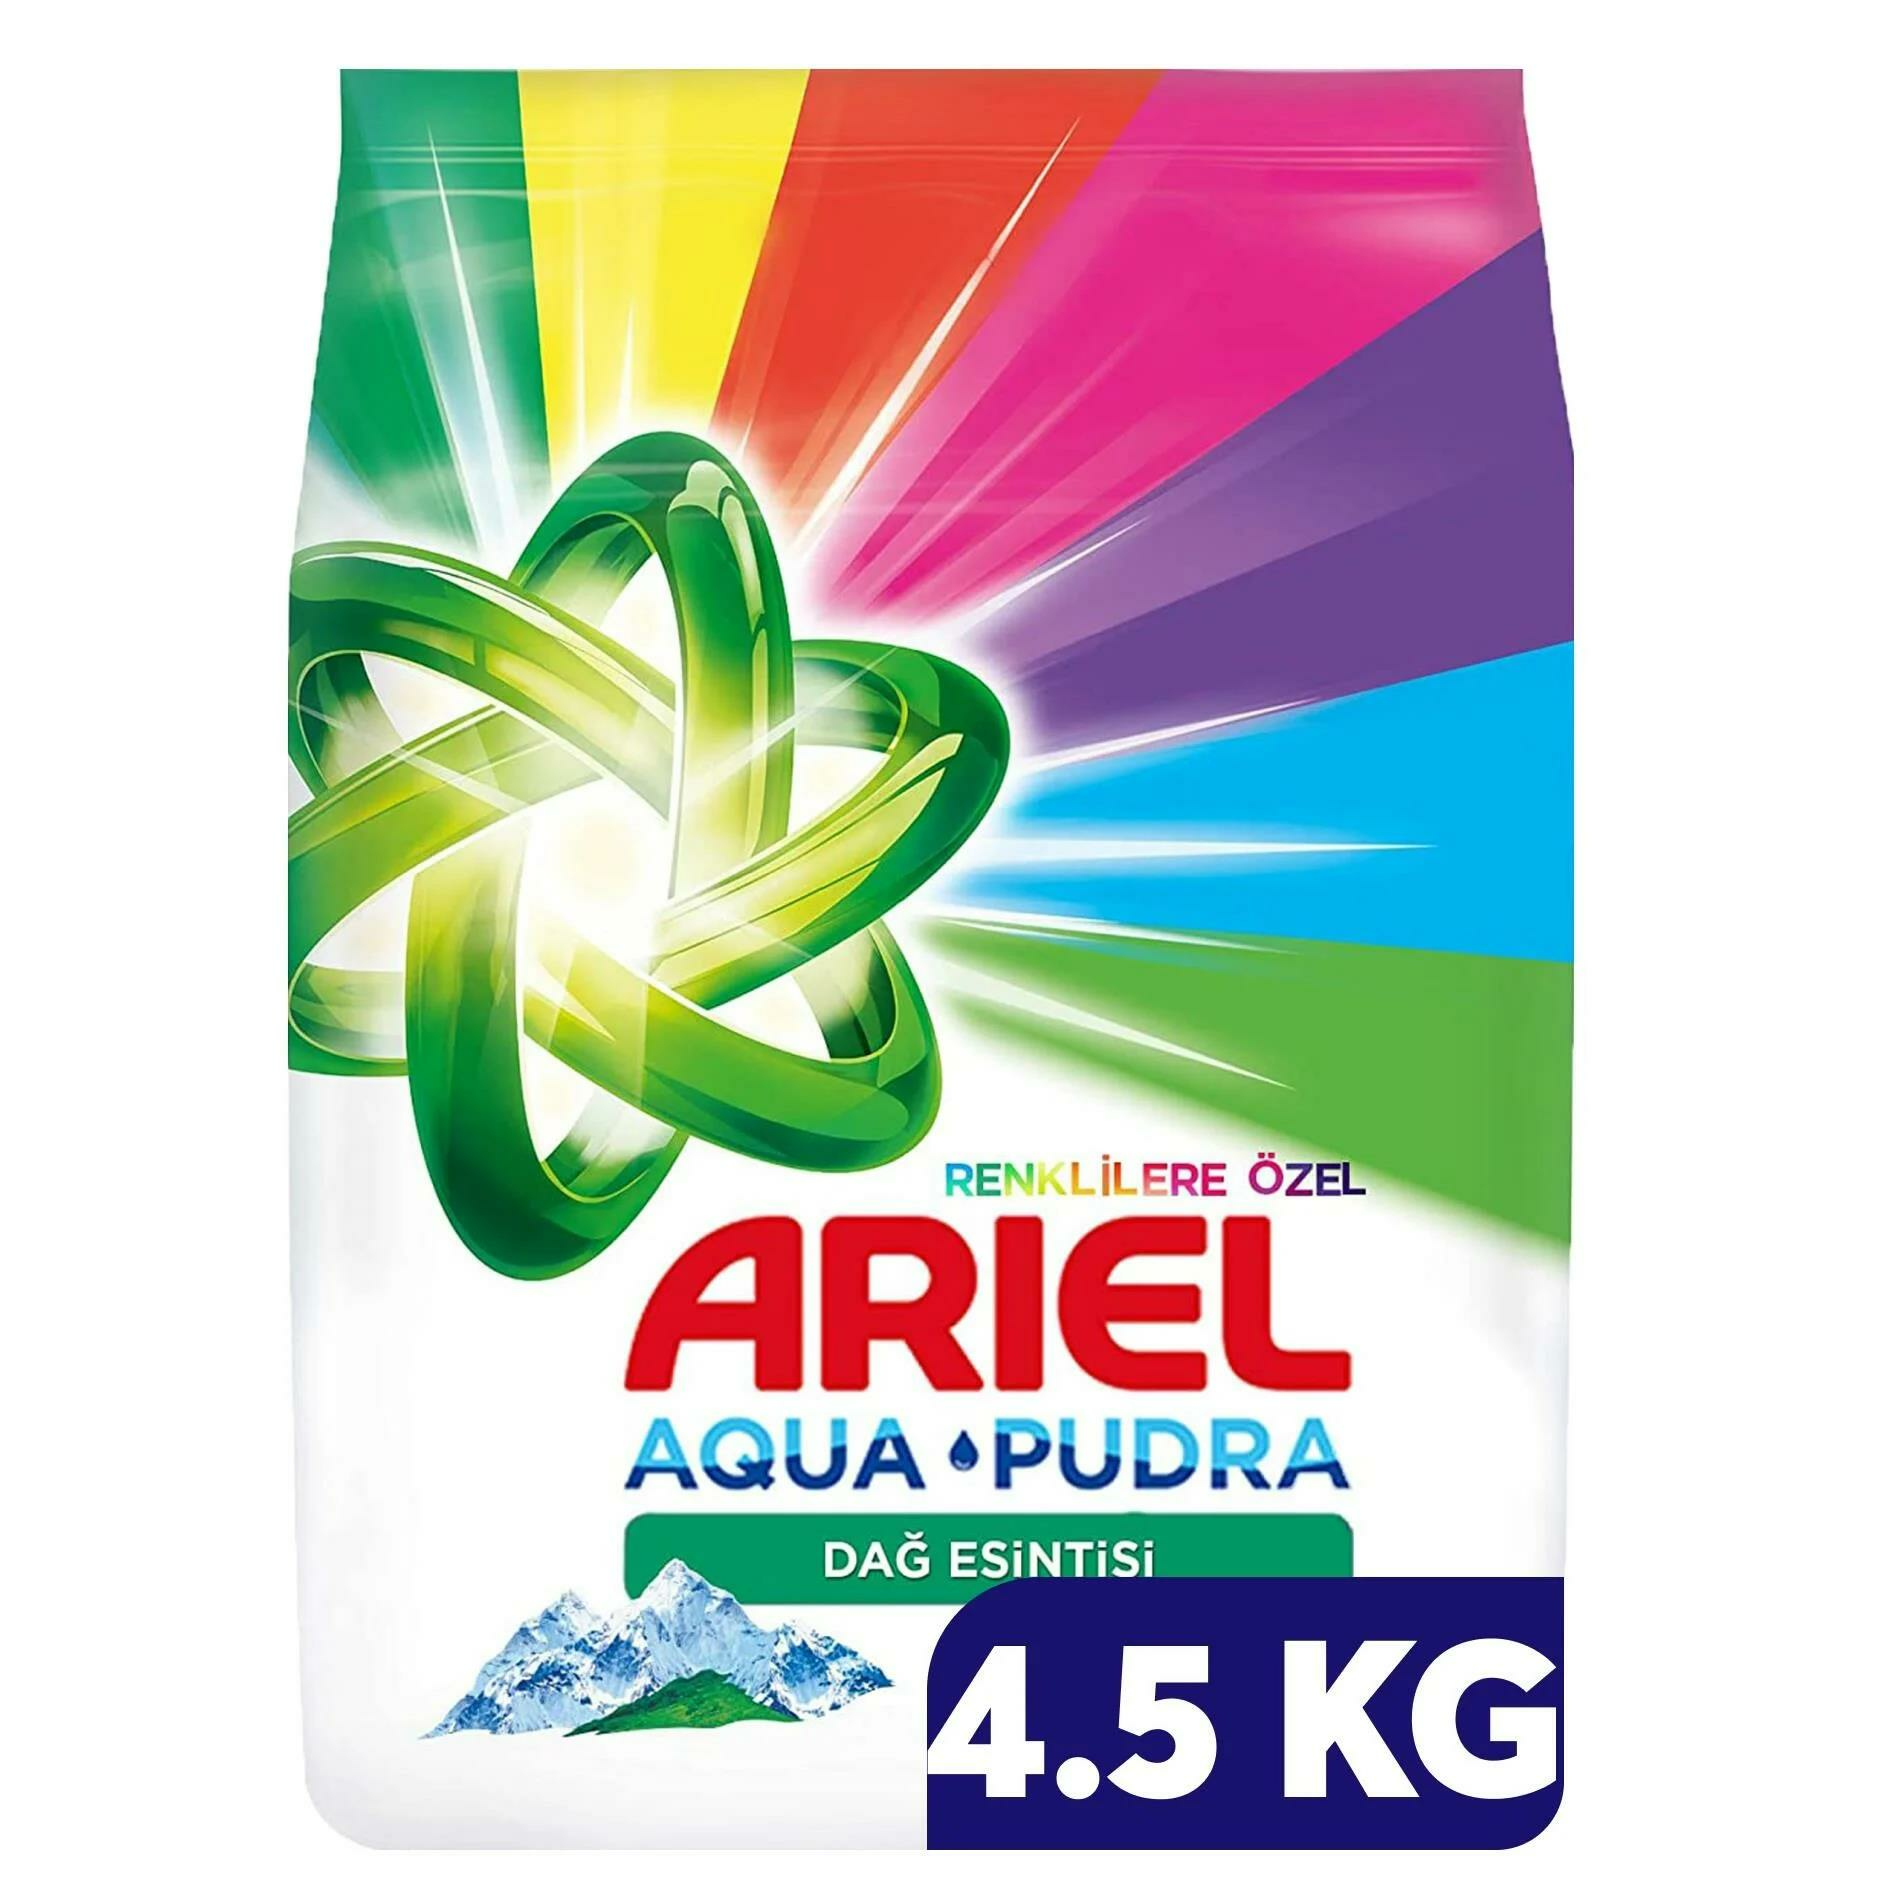 Ariel 4,5 kg Dağ Esintisi Renkliler